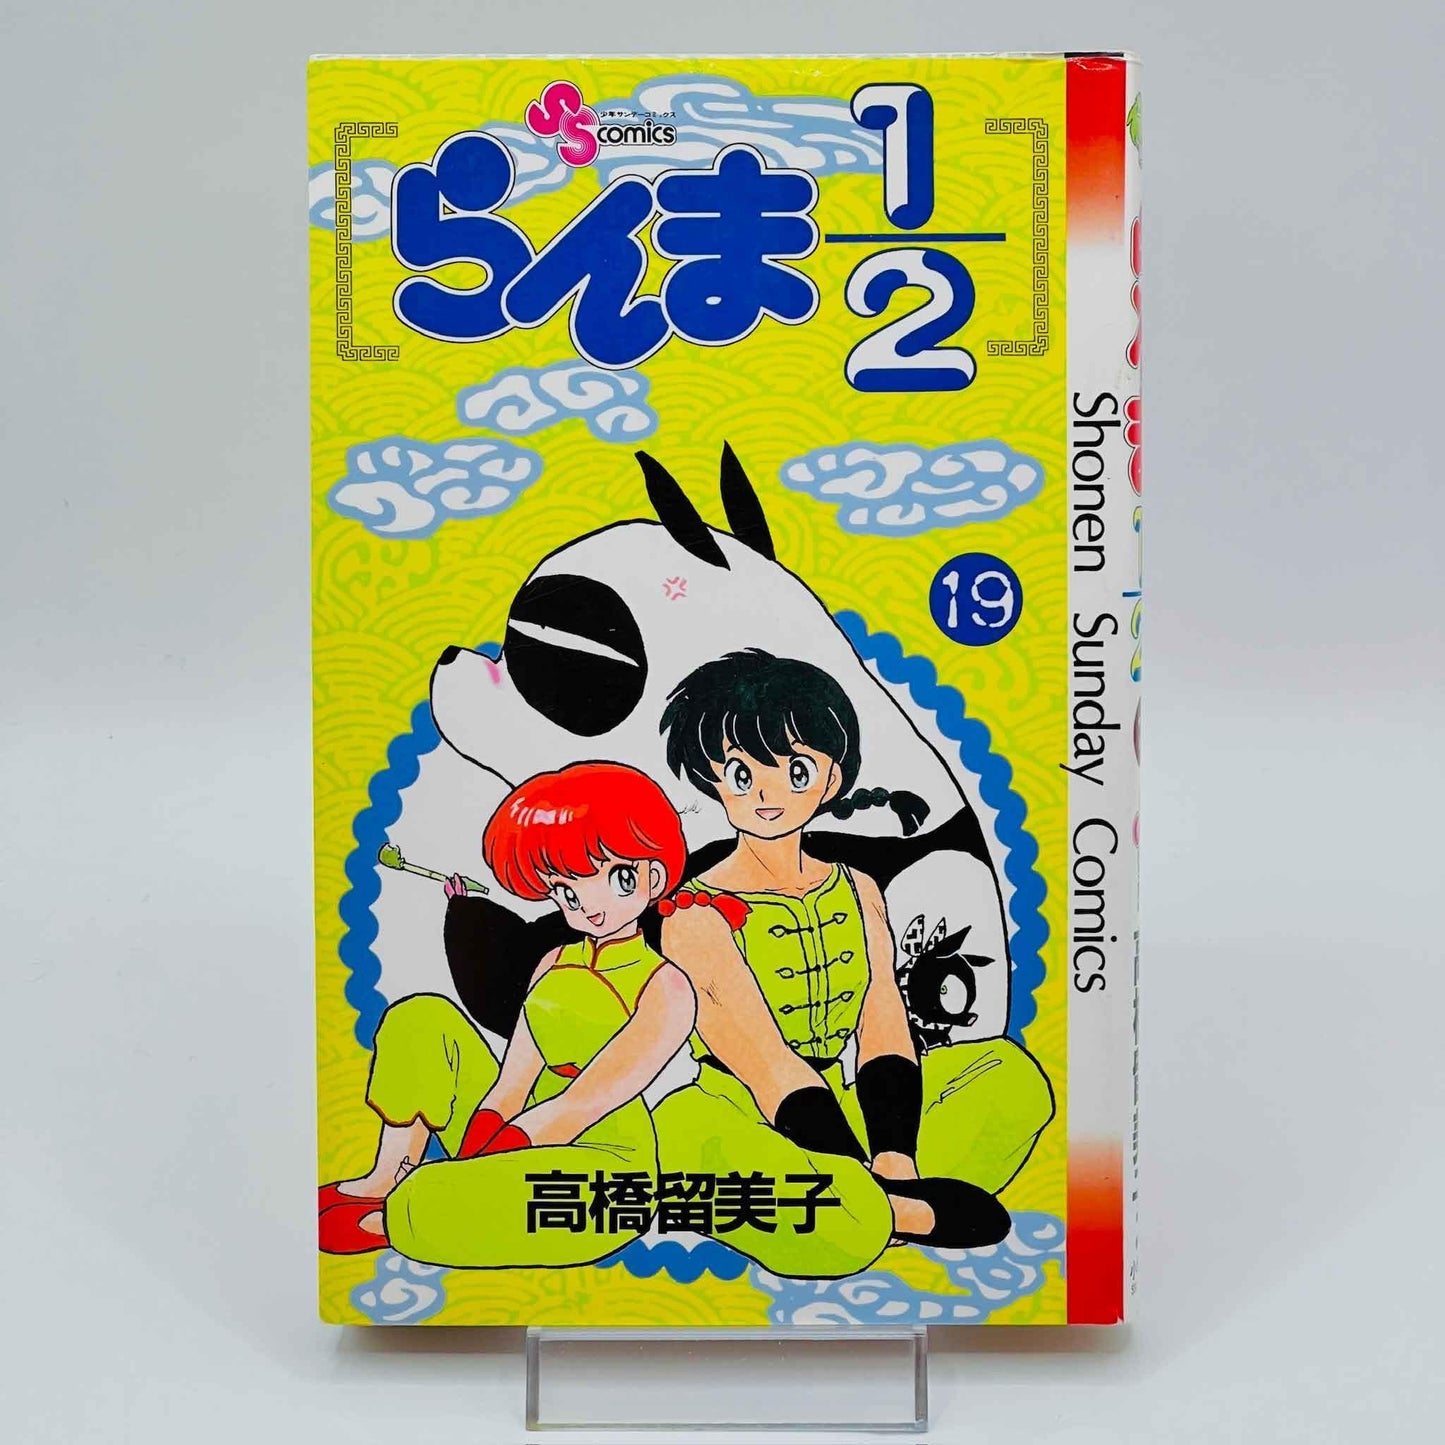 Ranma ½ - Volume 19 - 1stPrint.net - 1st First Print Edition Manga Store - M-RANMA-19-001